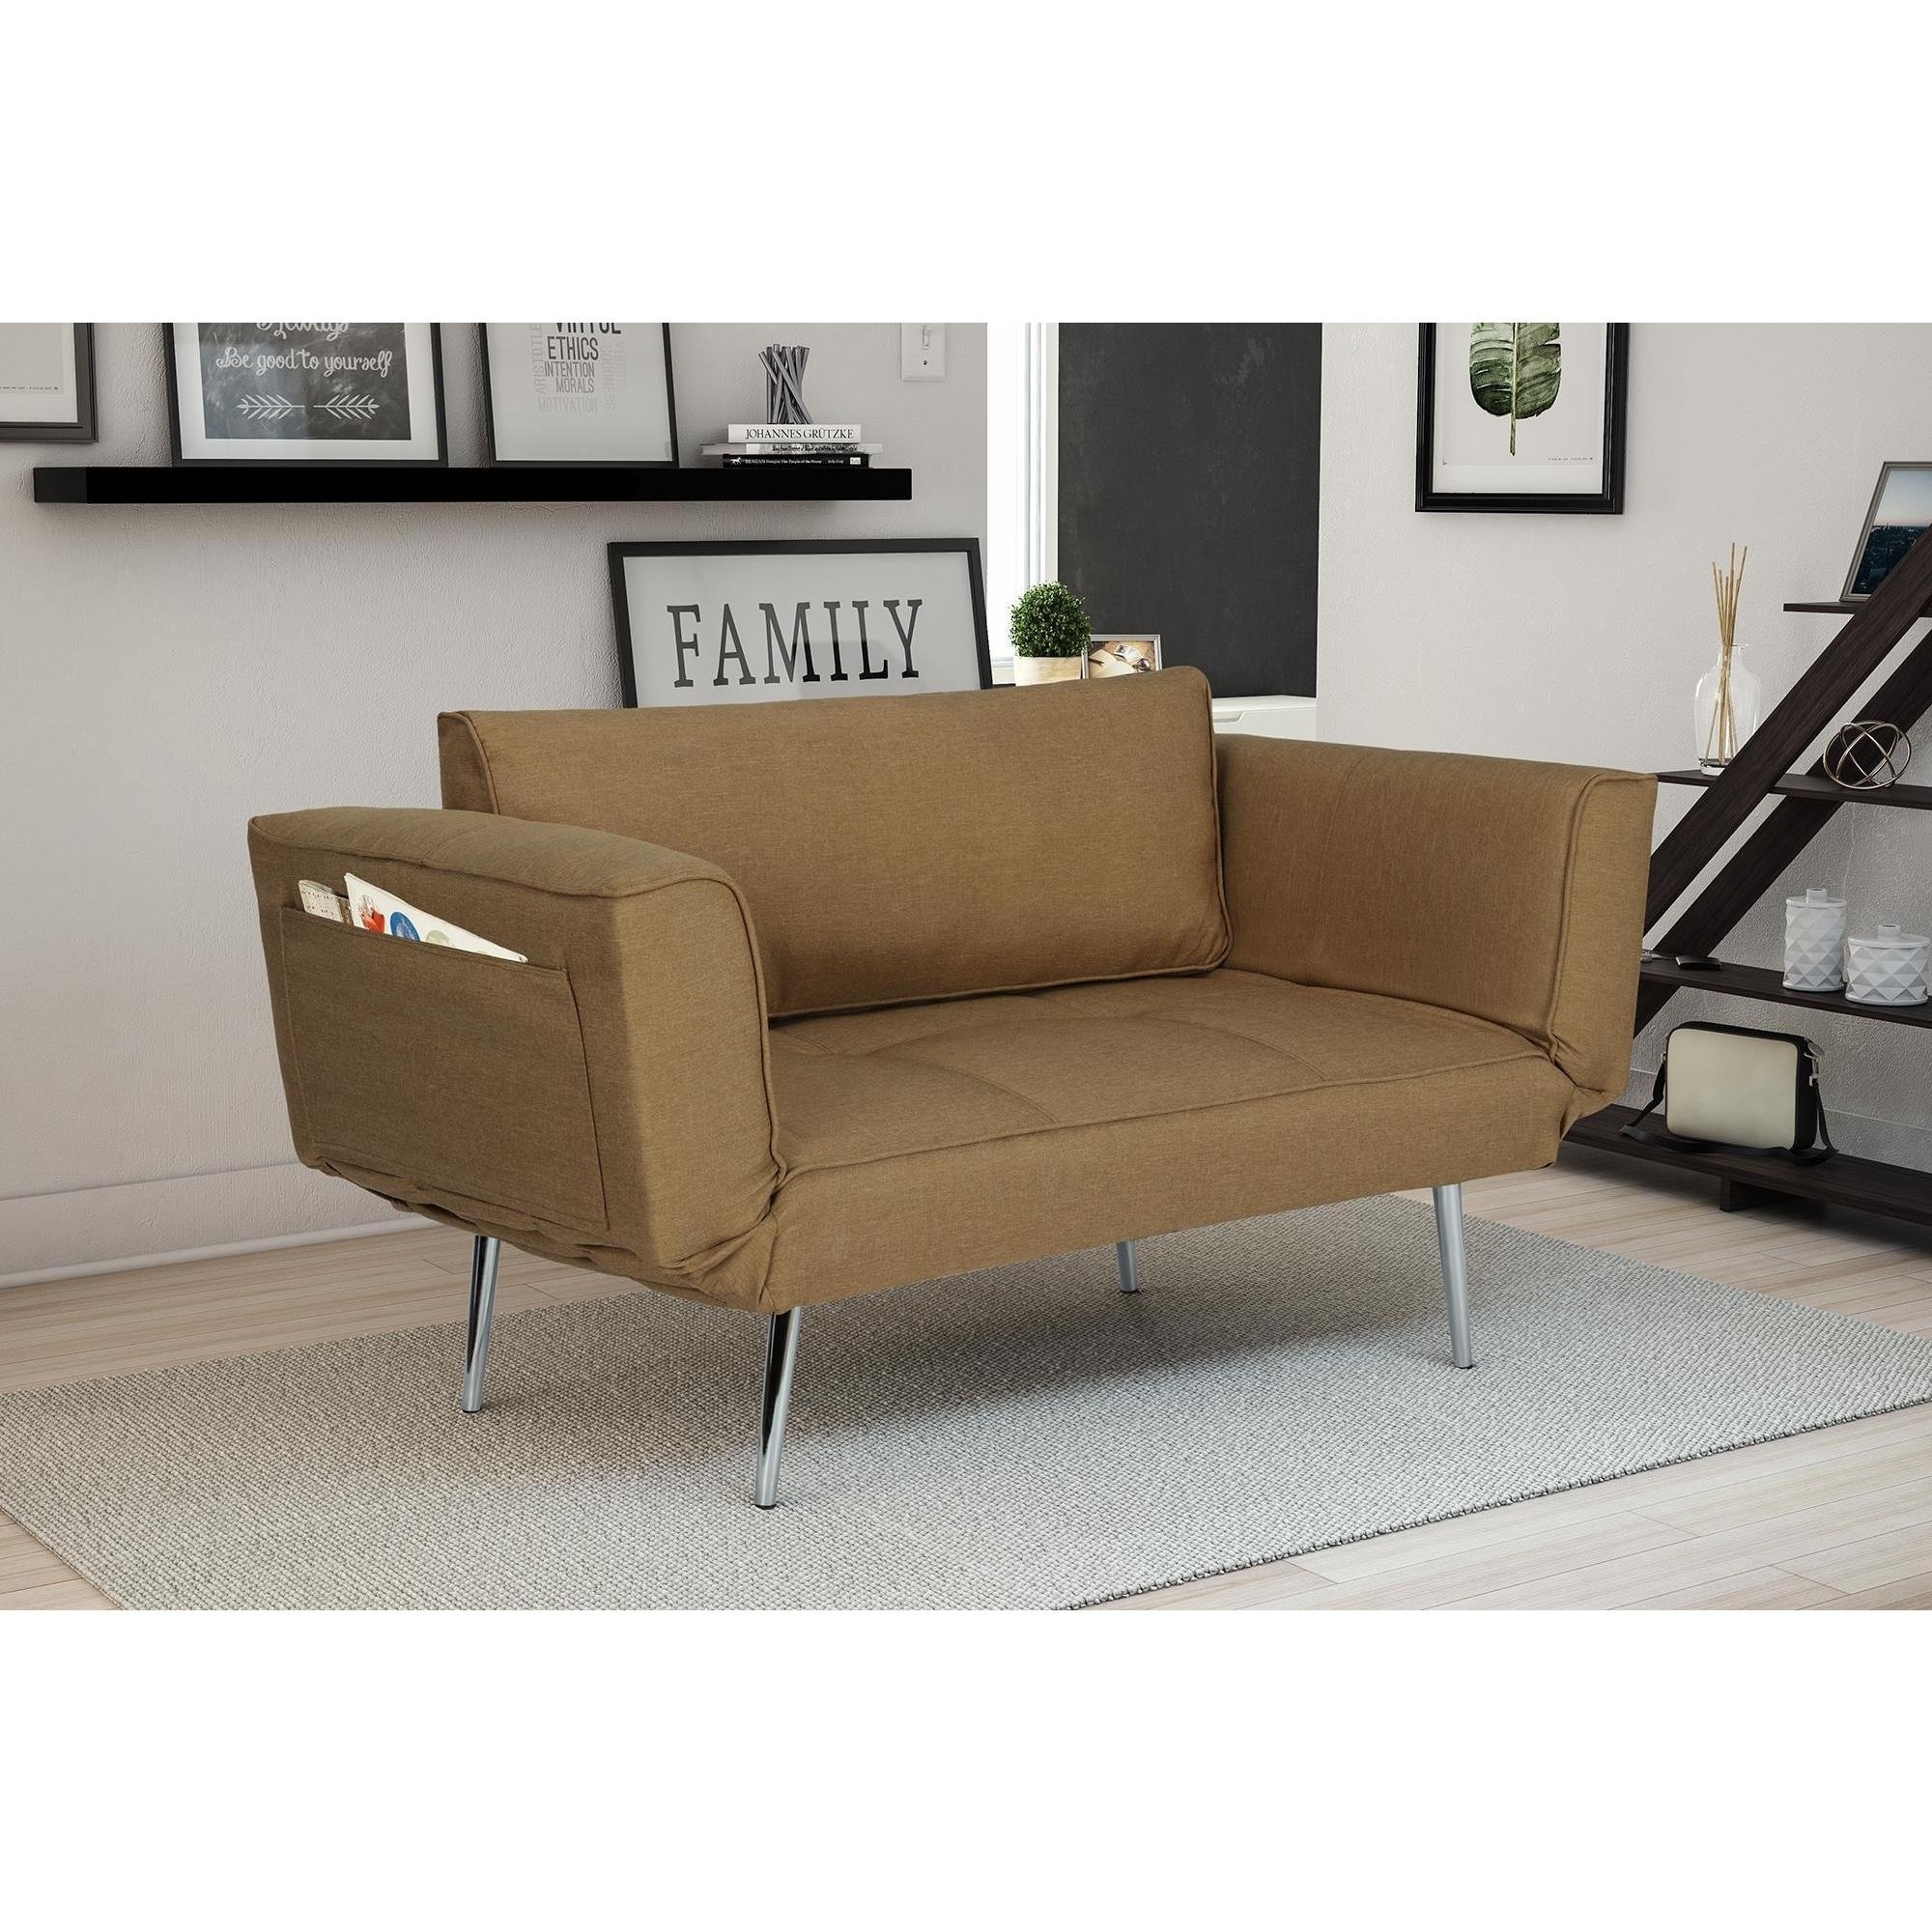 Novogratz Leyla Loveseat with Magazine Storage Adjustable Sofa Bed Armrests to Convert into a Couch Sleeper Light Gray Futon